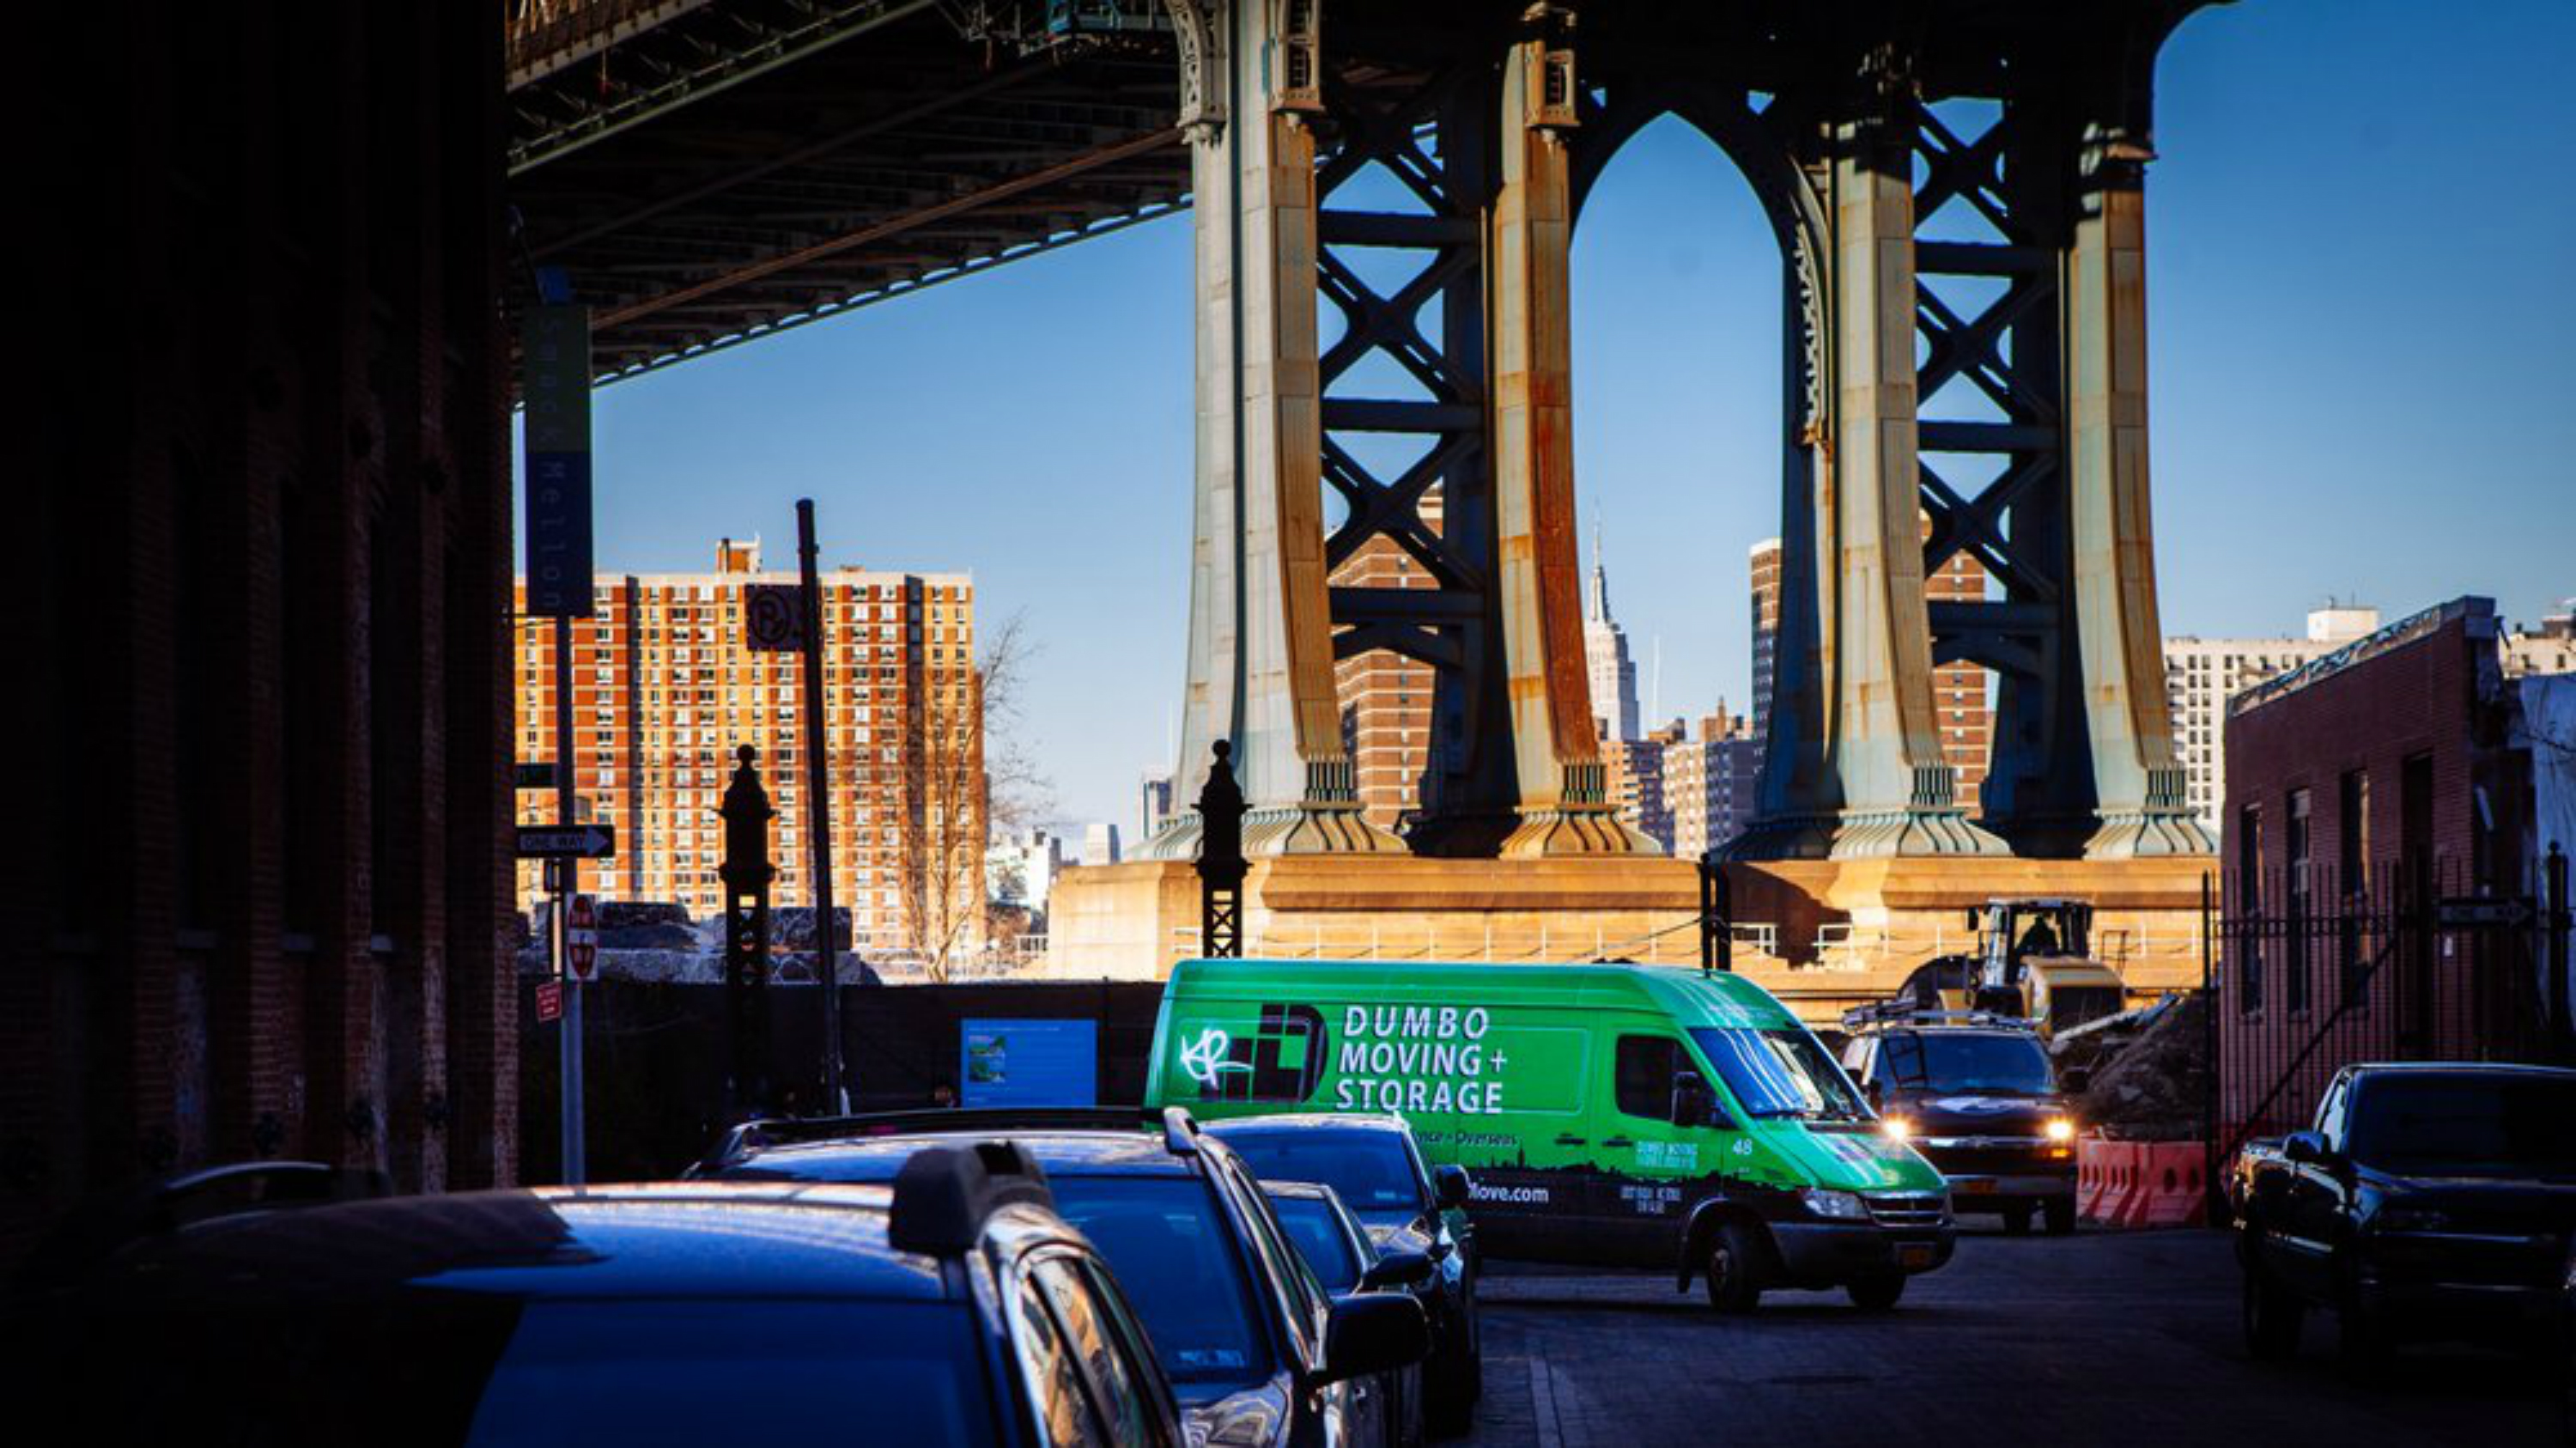 NYC Moving Companies | Dumbo Moving and Storage NYC 3000x1686 JPG